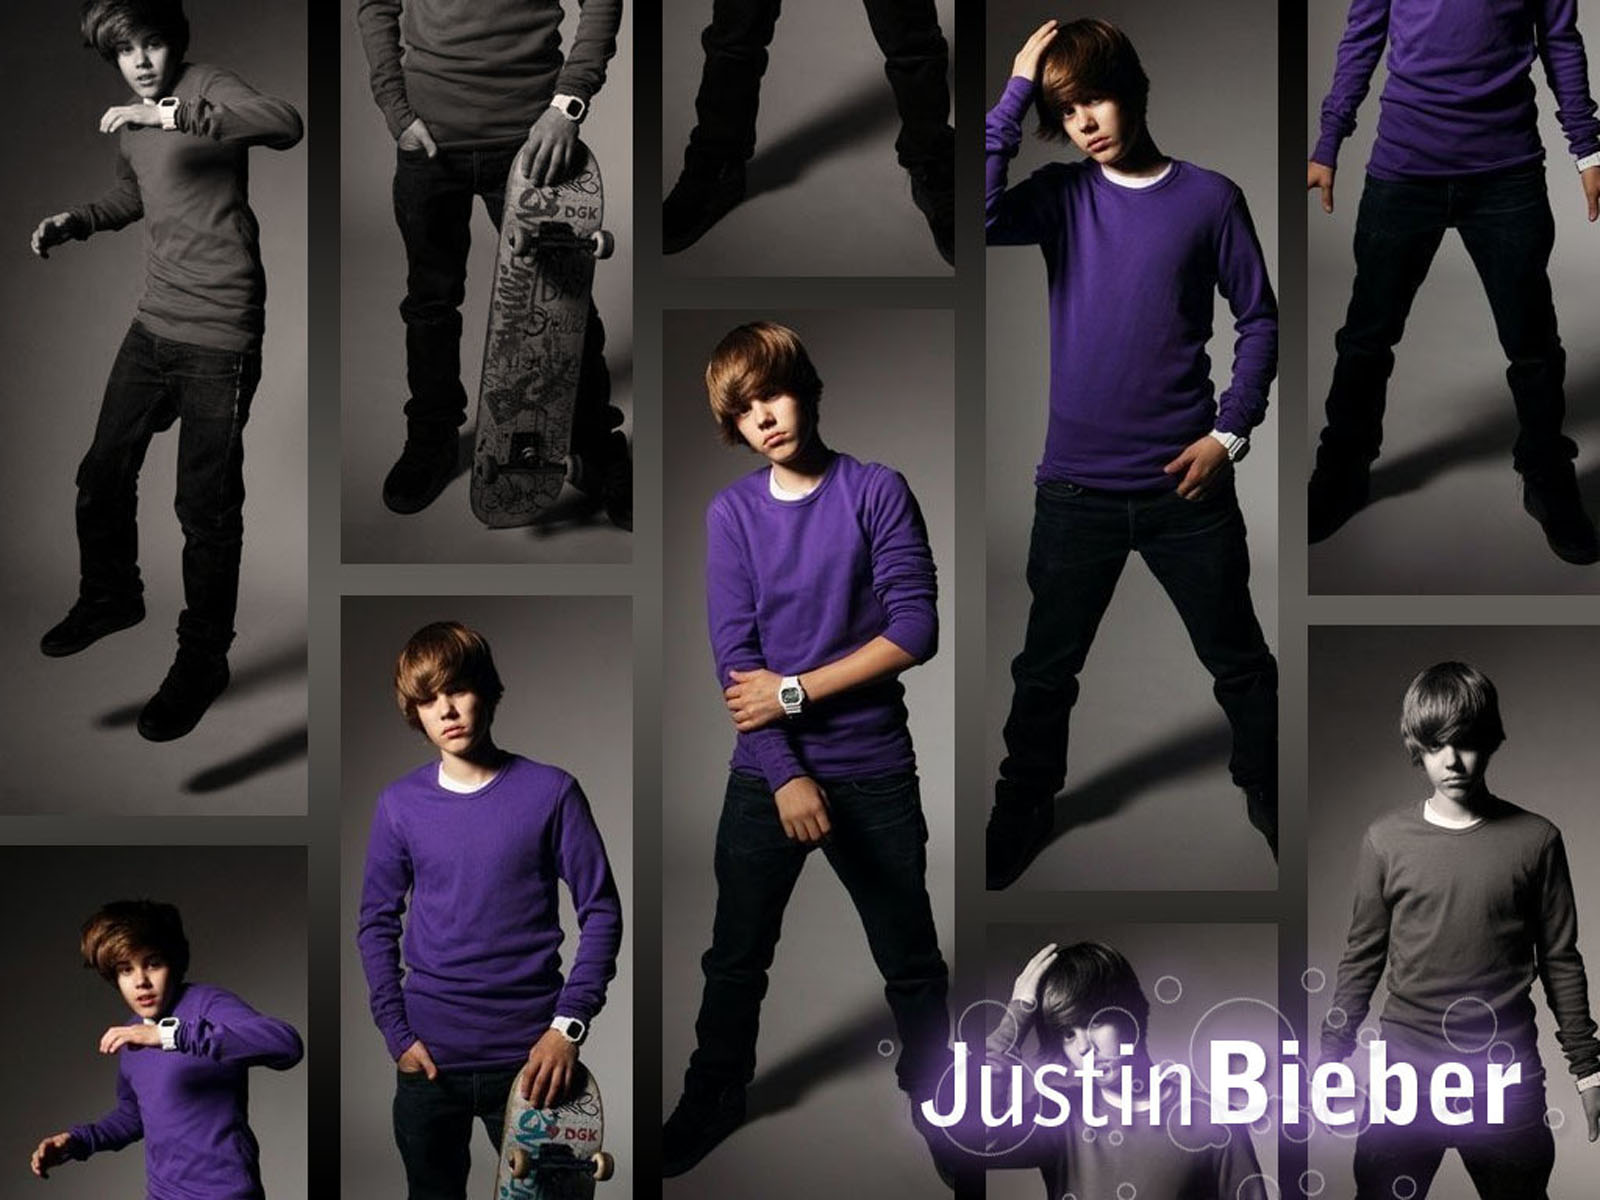 Justin Bieber Desktop Background Free submited images